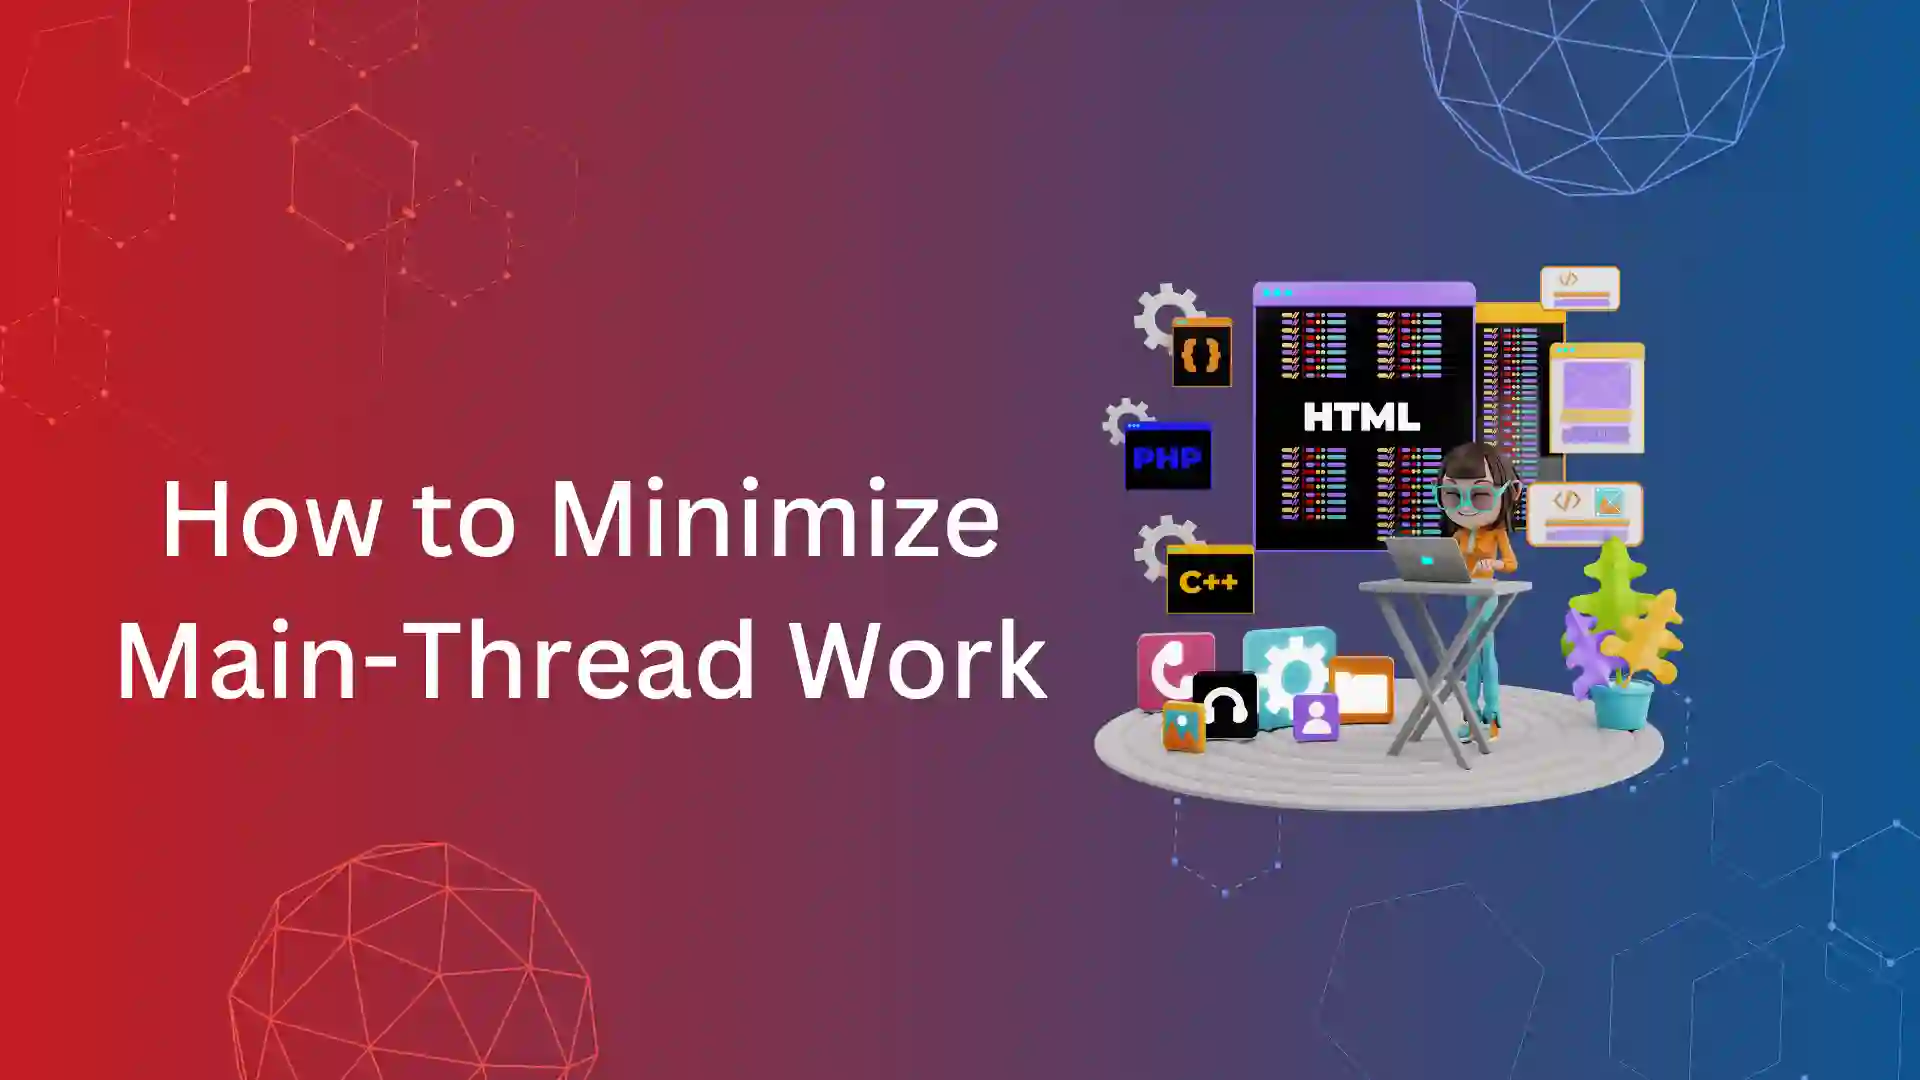 How to Minimize main-thread work